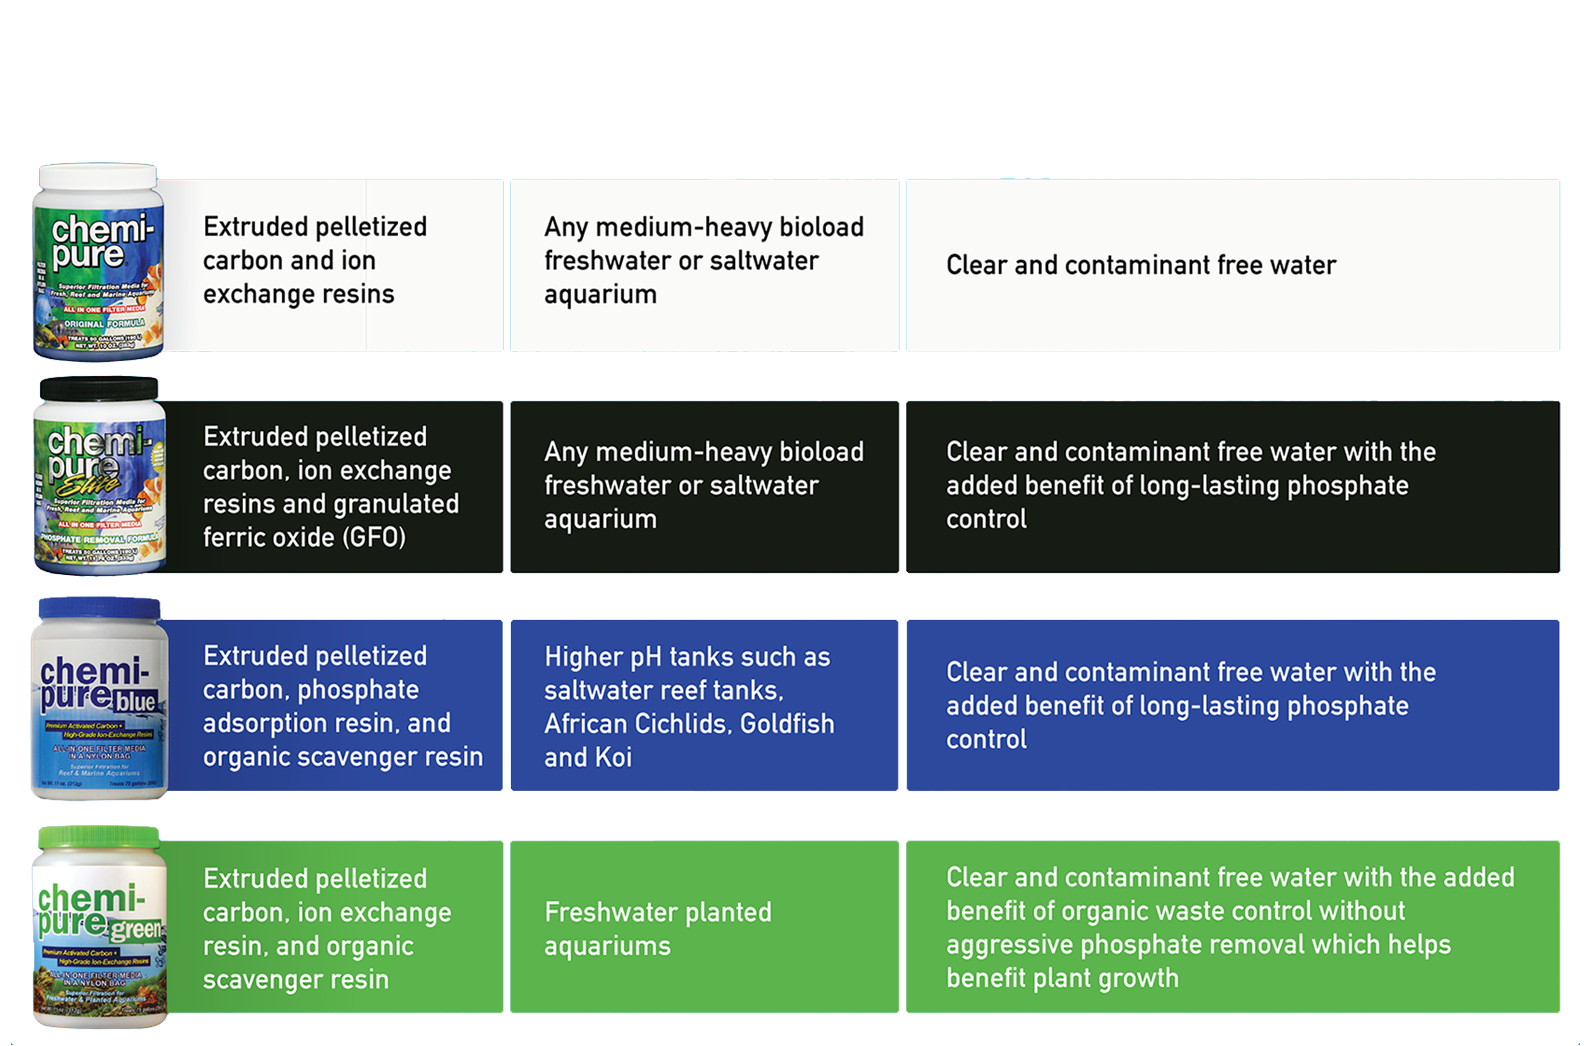 Home - Chemi-pure Advanced Aquarist Products